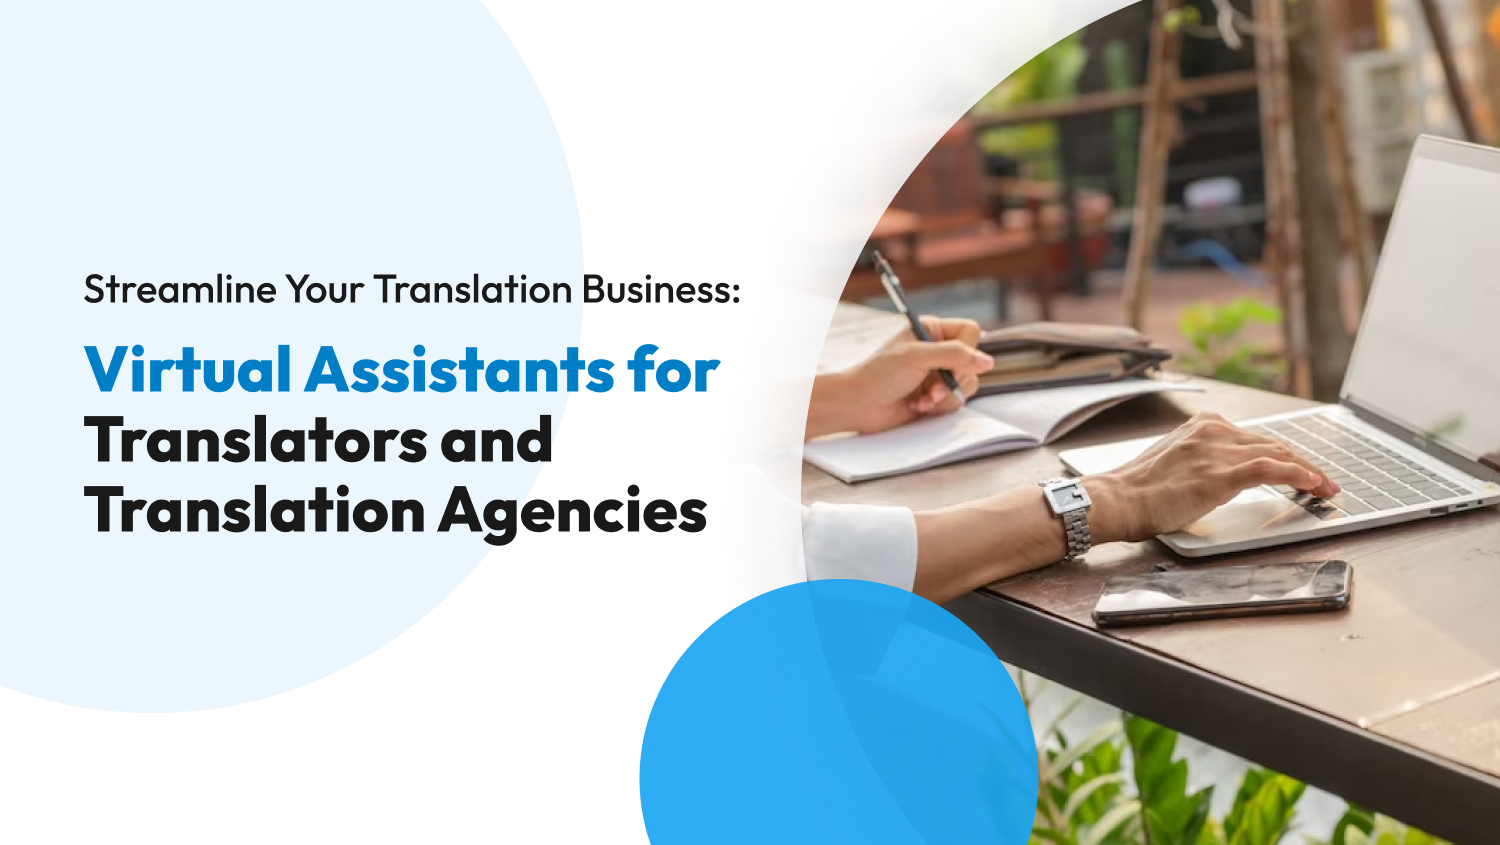 Streamline Your Translation Business: Virtual Assistants for Translators and Translation Agencies